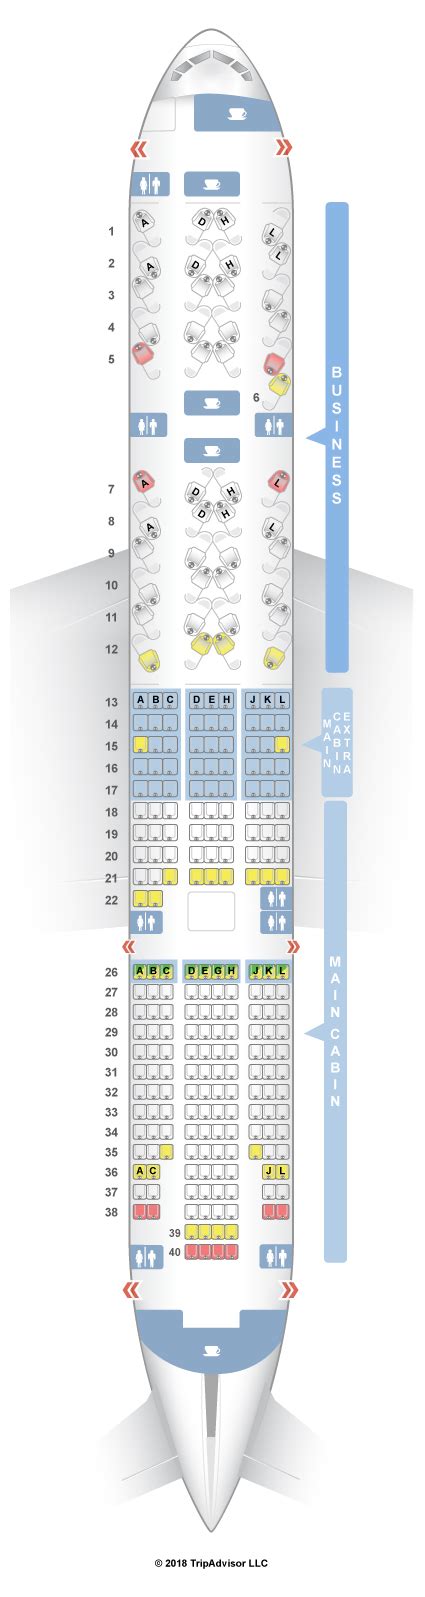 Seatguru Seat Map American Airlines Boeing 777 200 777 V2